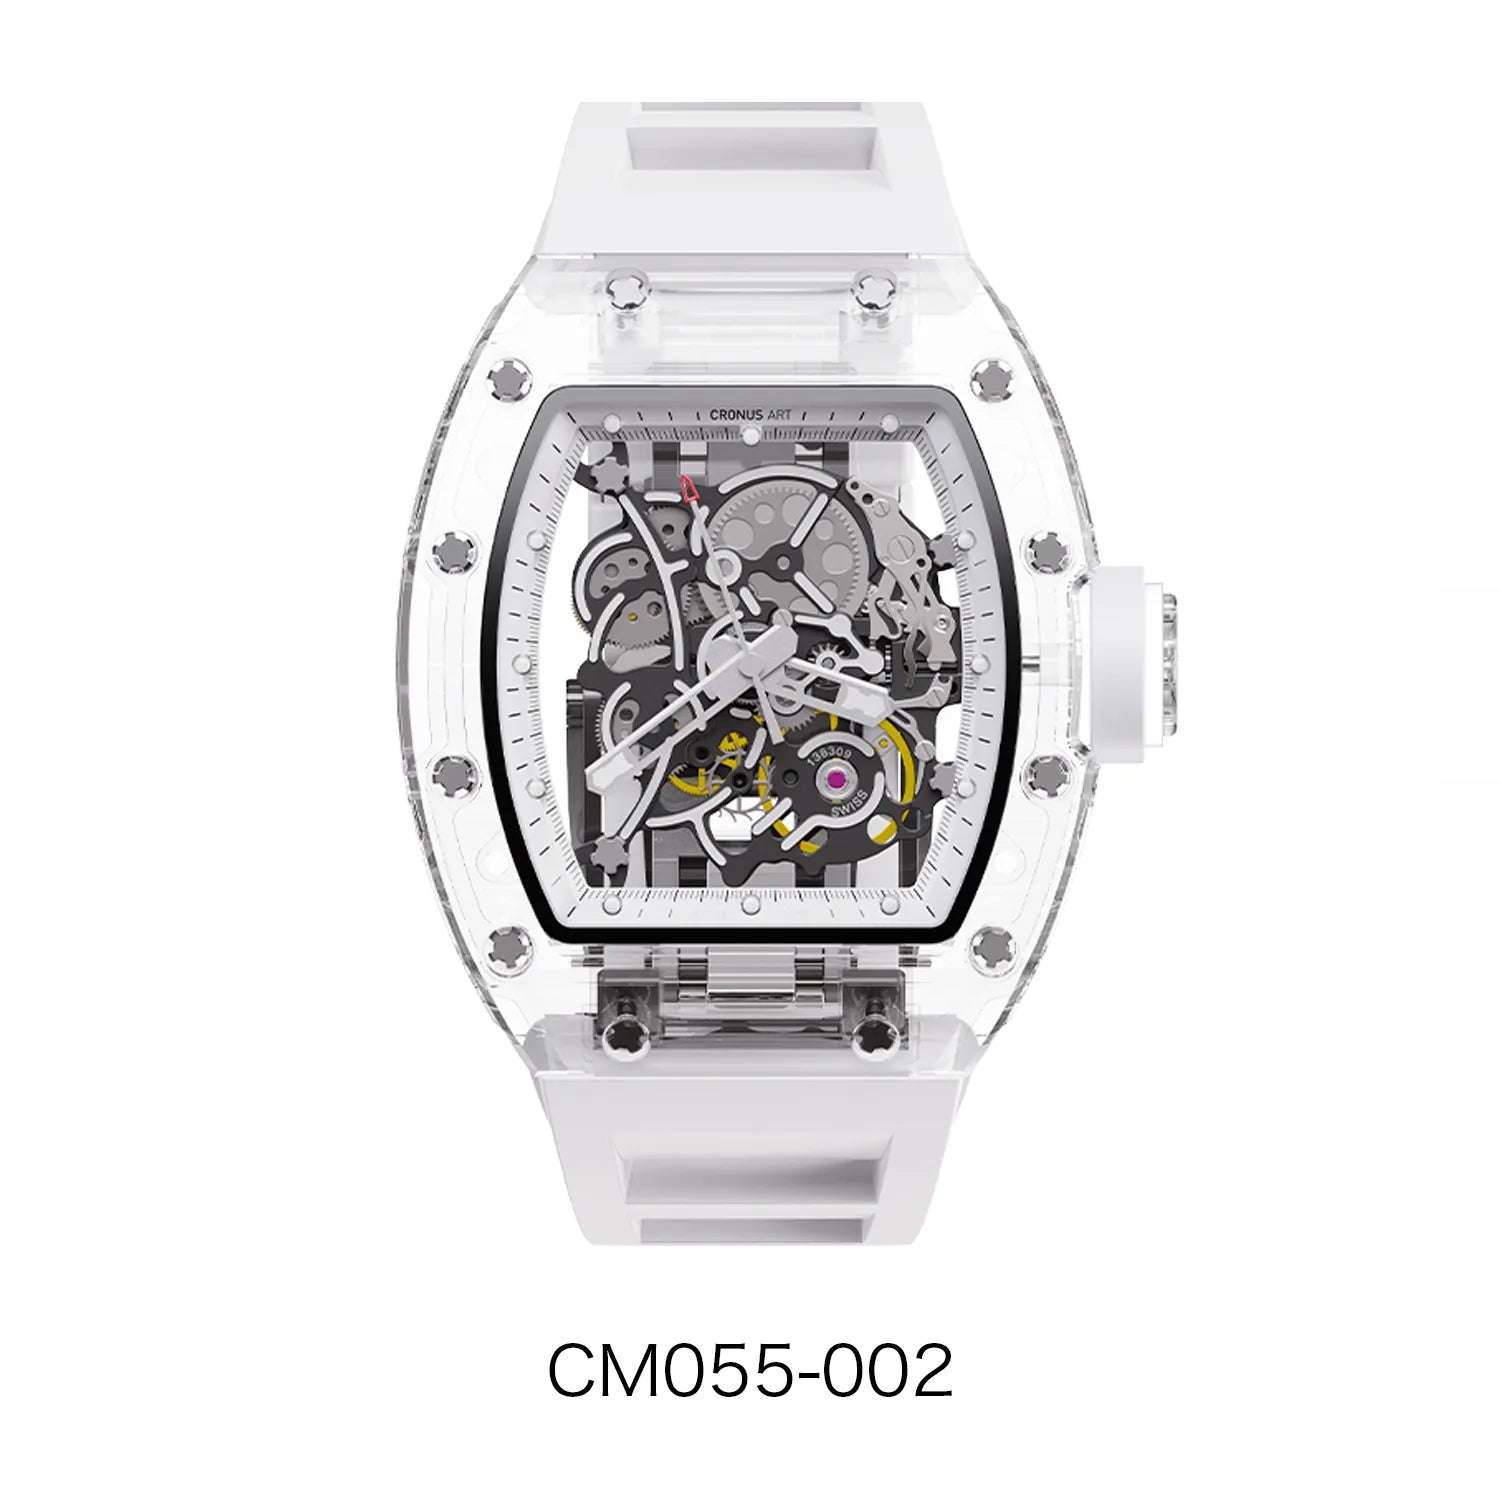 Customized Swiss Manual Winding Watch | Scratch Resistant Sapphire Glass | 2-Year Warranty